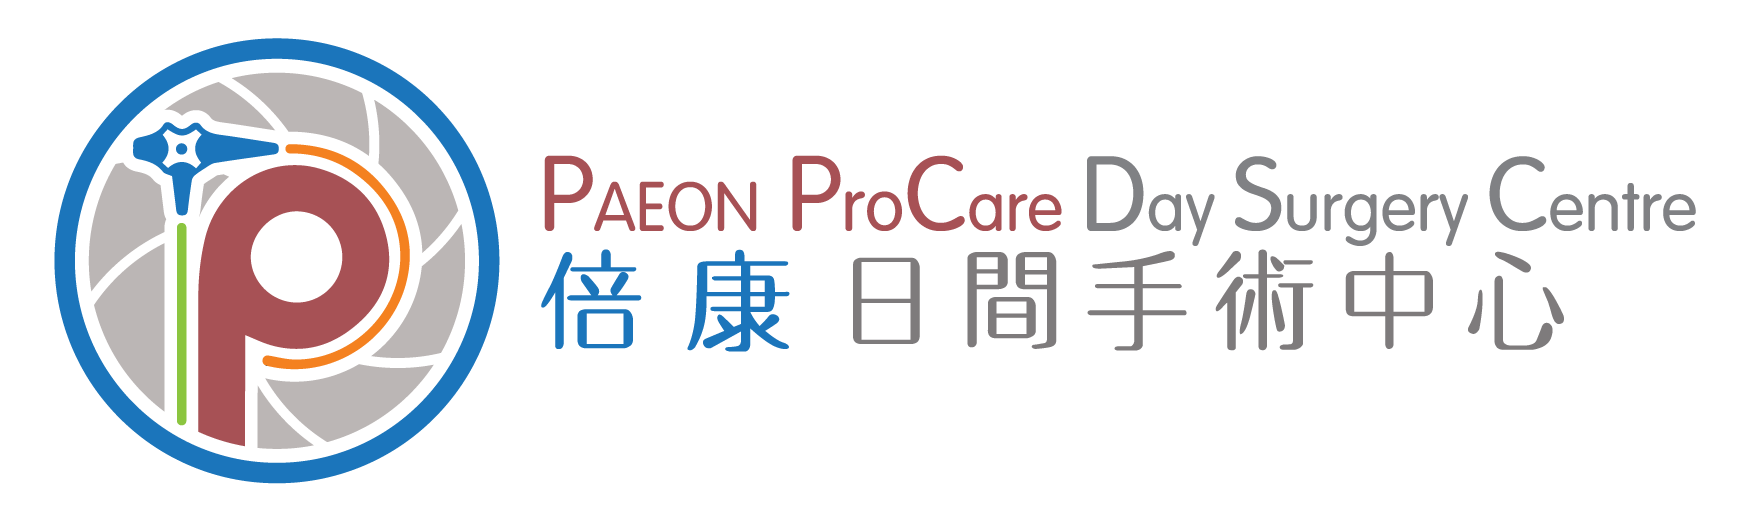 Paeon ProCare Day Surgery Centre